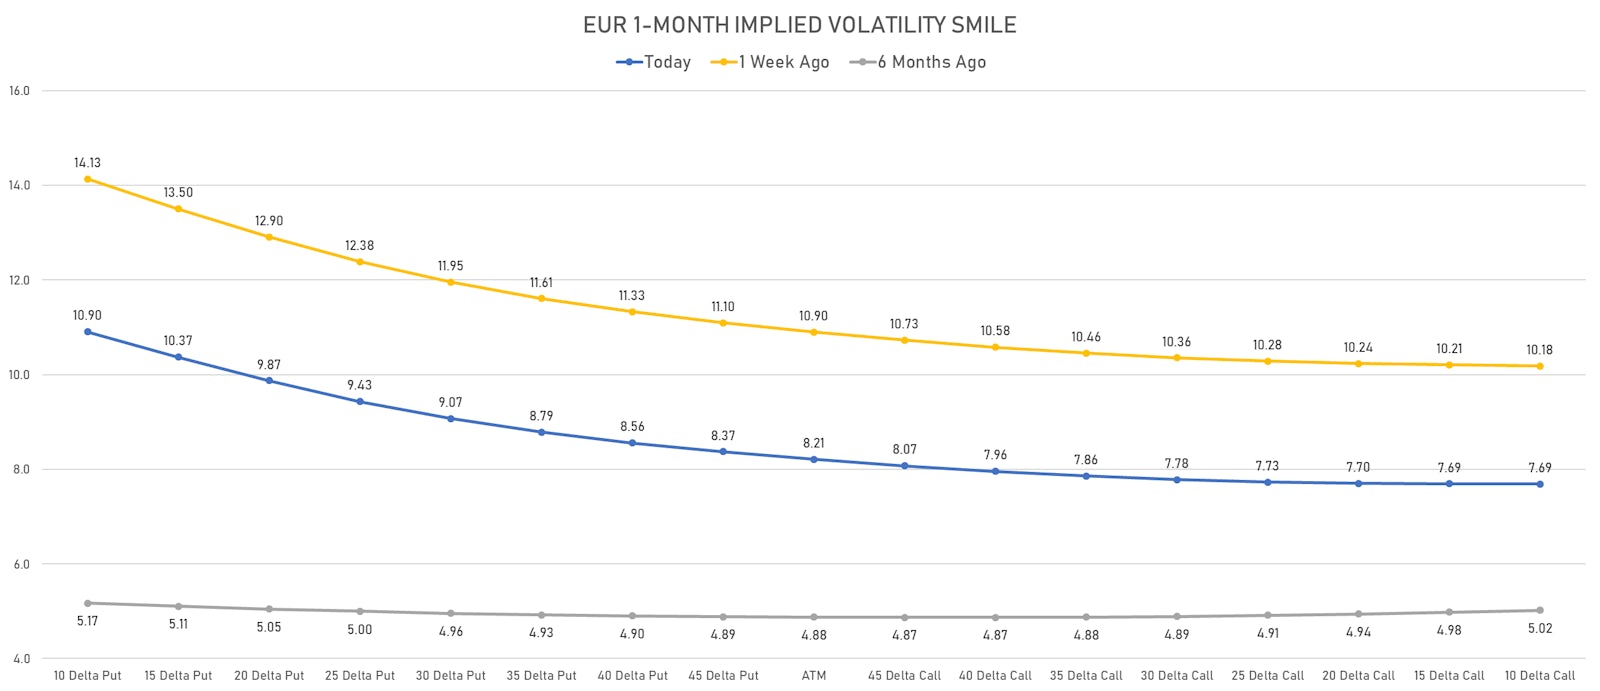 Euro 1-Month Implied Volatily Smile | Sources: ϕpost, Refinitiv data